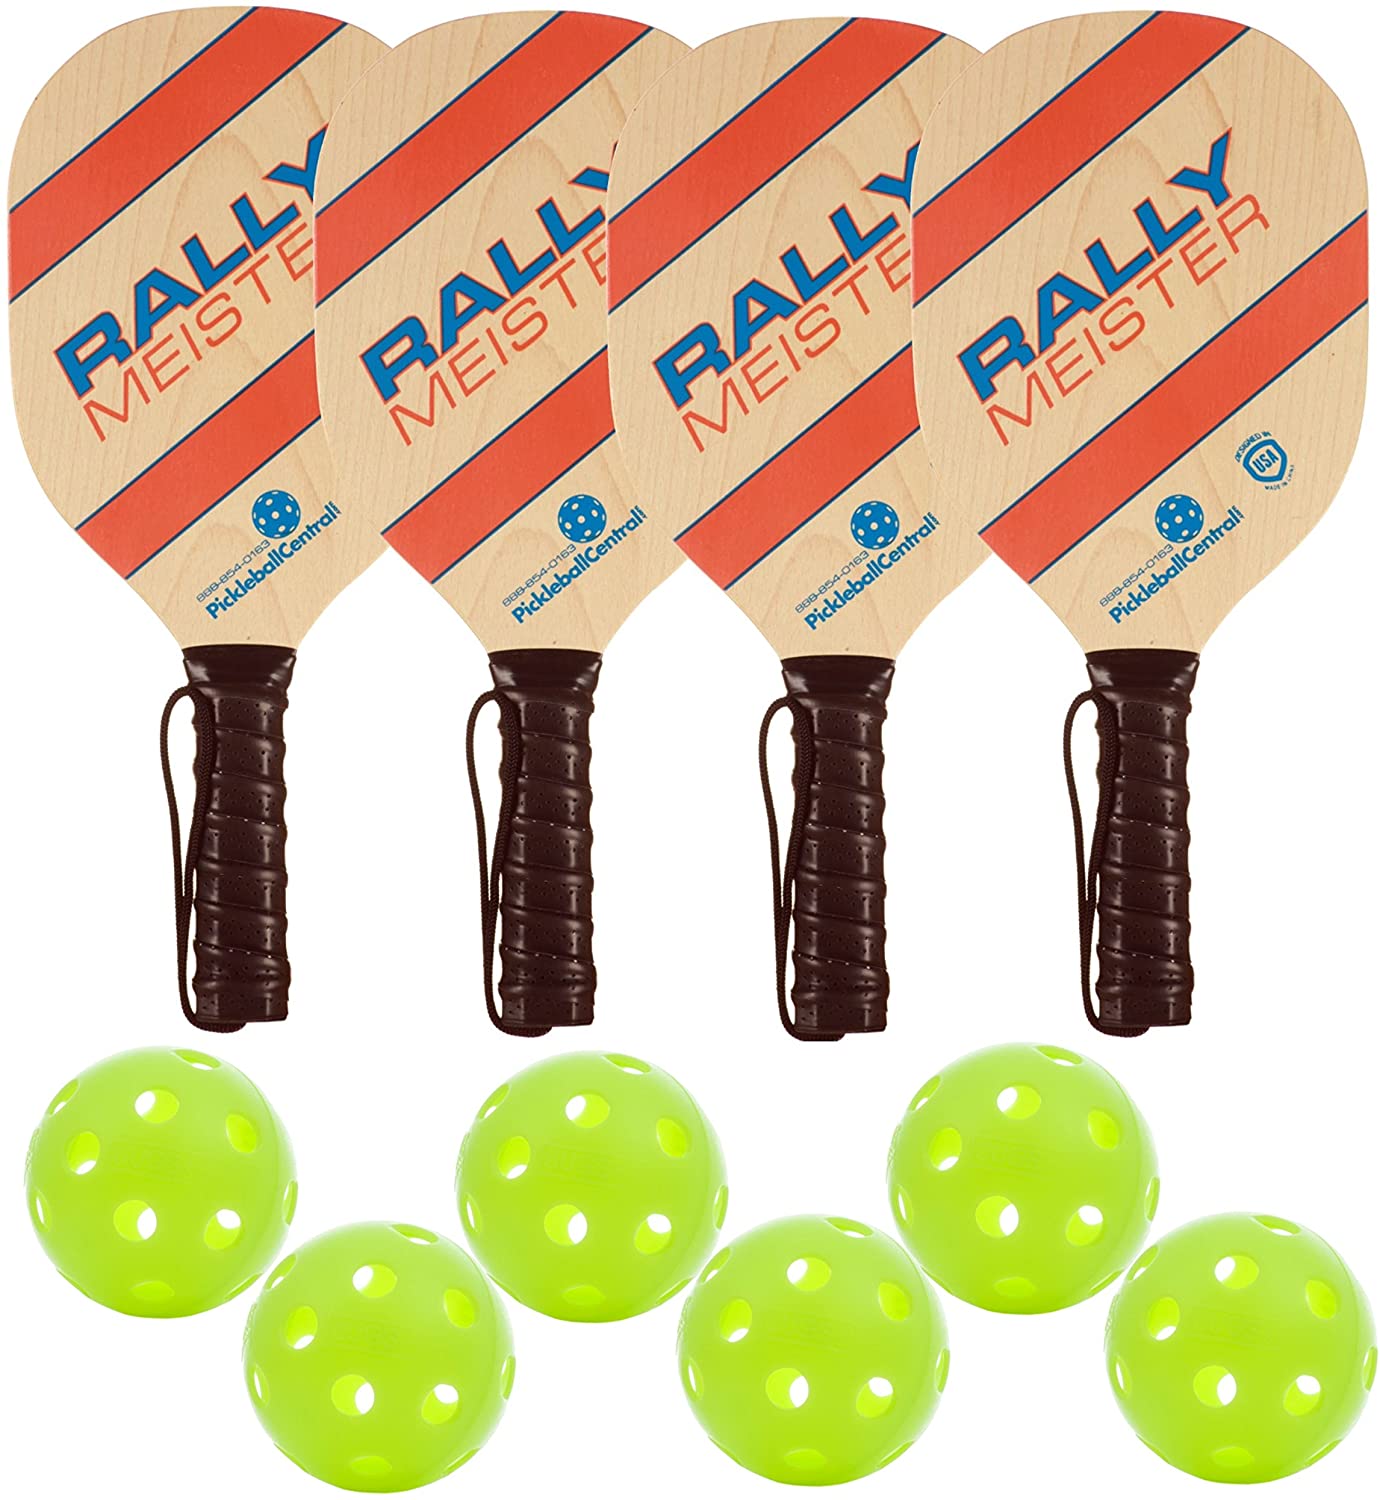 Rally Meister Pickleball Paddle Deluxe Bundle - 4 Wood Paddles & Balls Pickleball Set